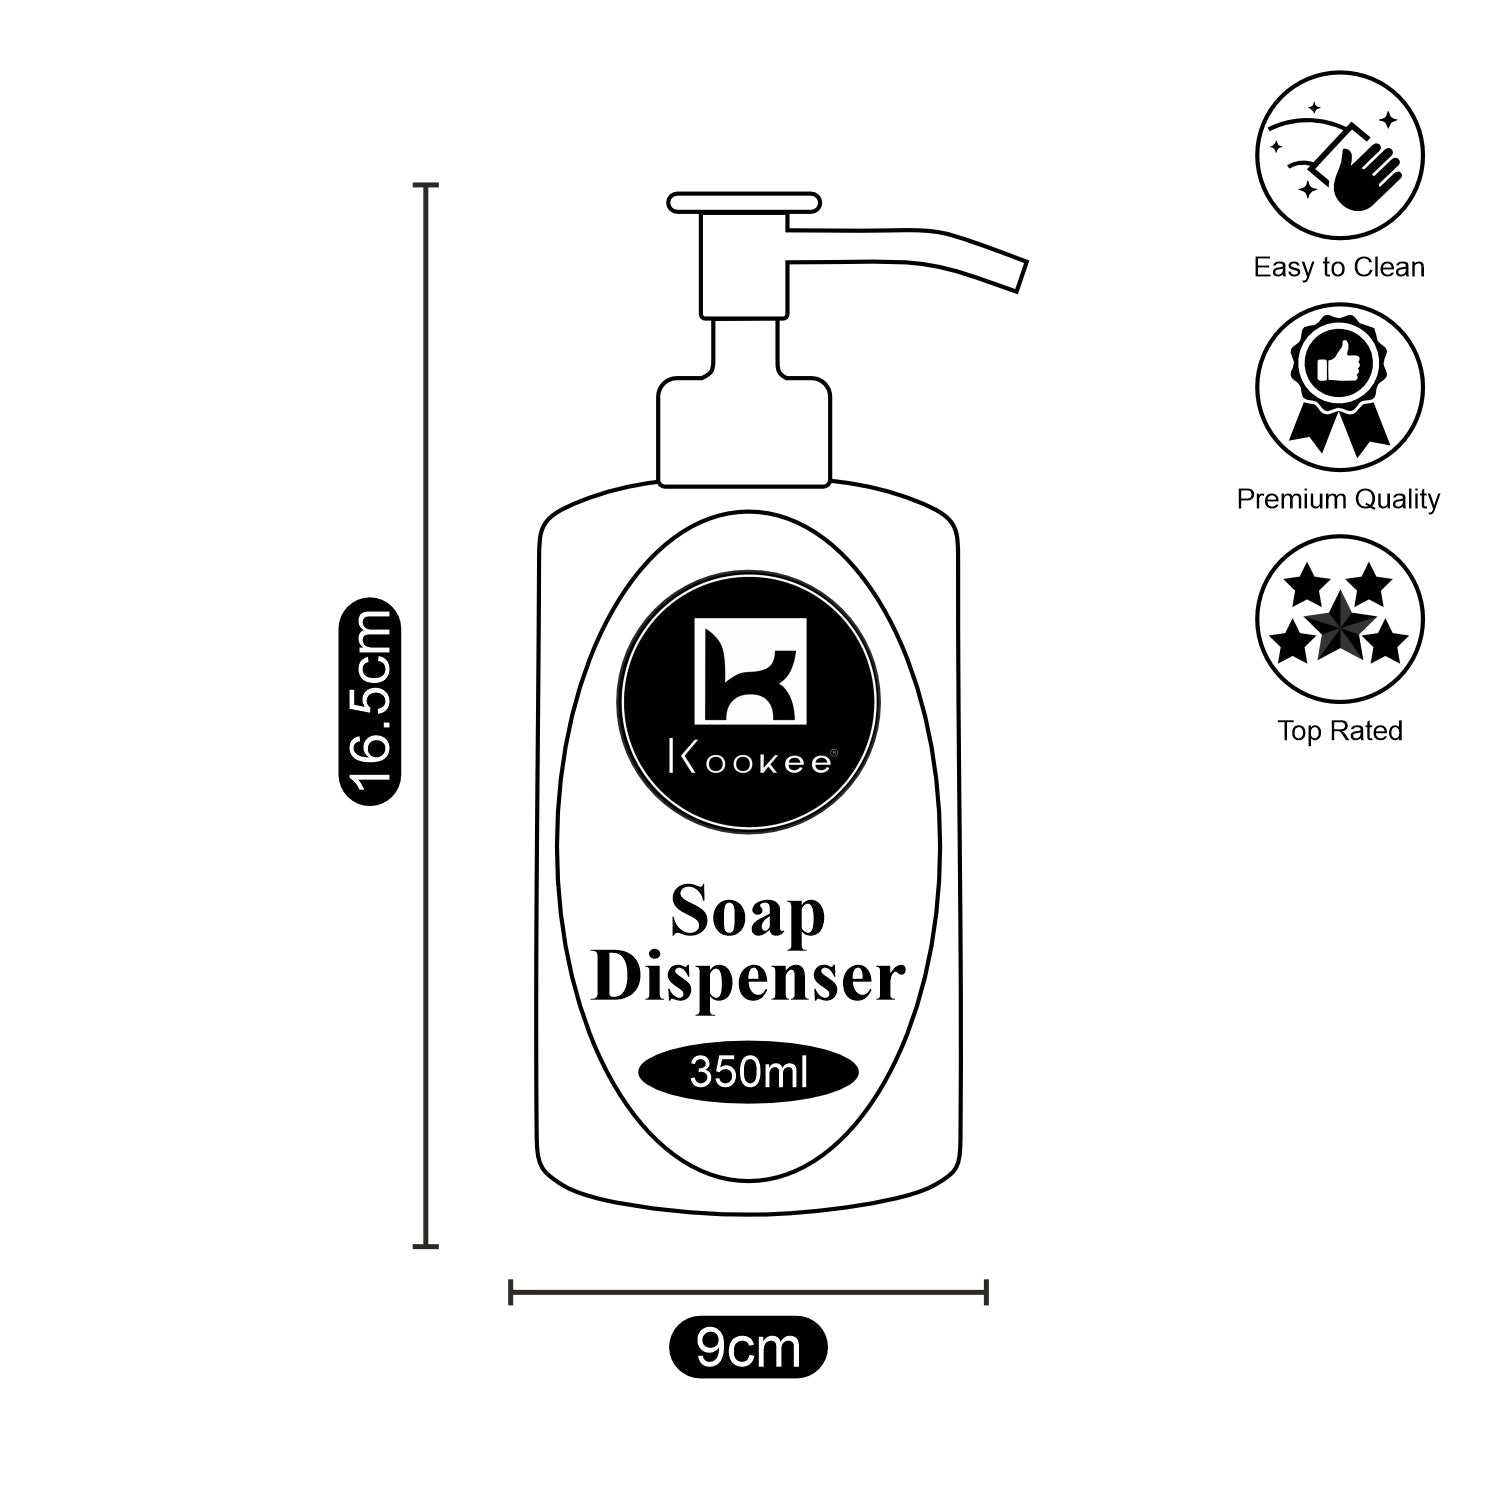 Ceramic Soap Dispenser liquid handwash pump for Bathroom, Set of 1, Black/Gold (10591)